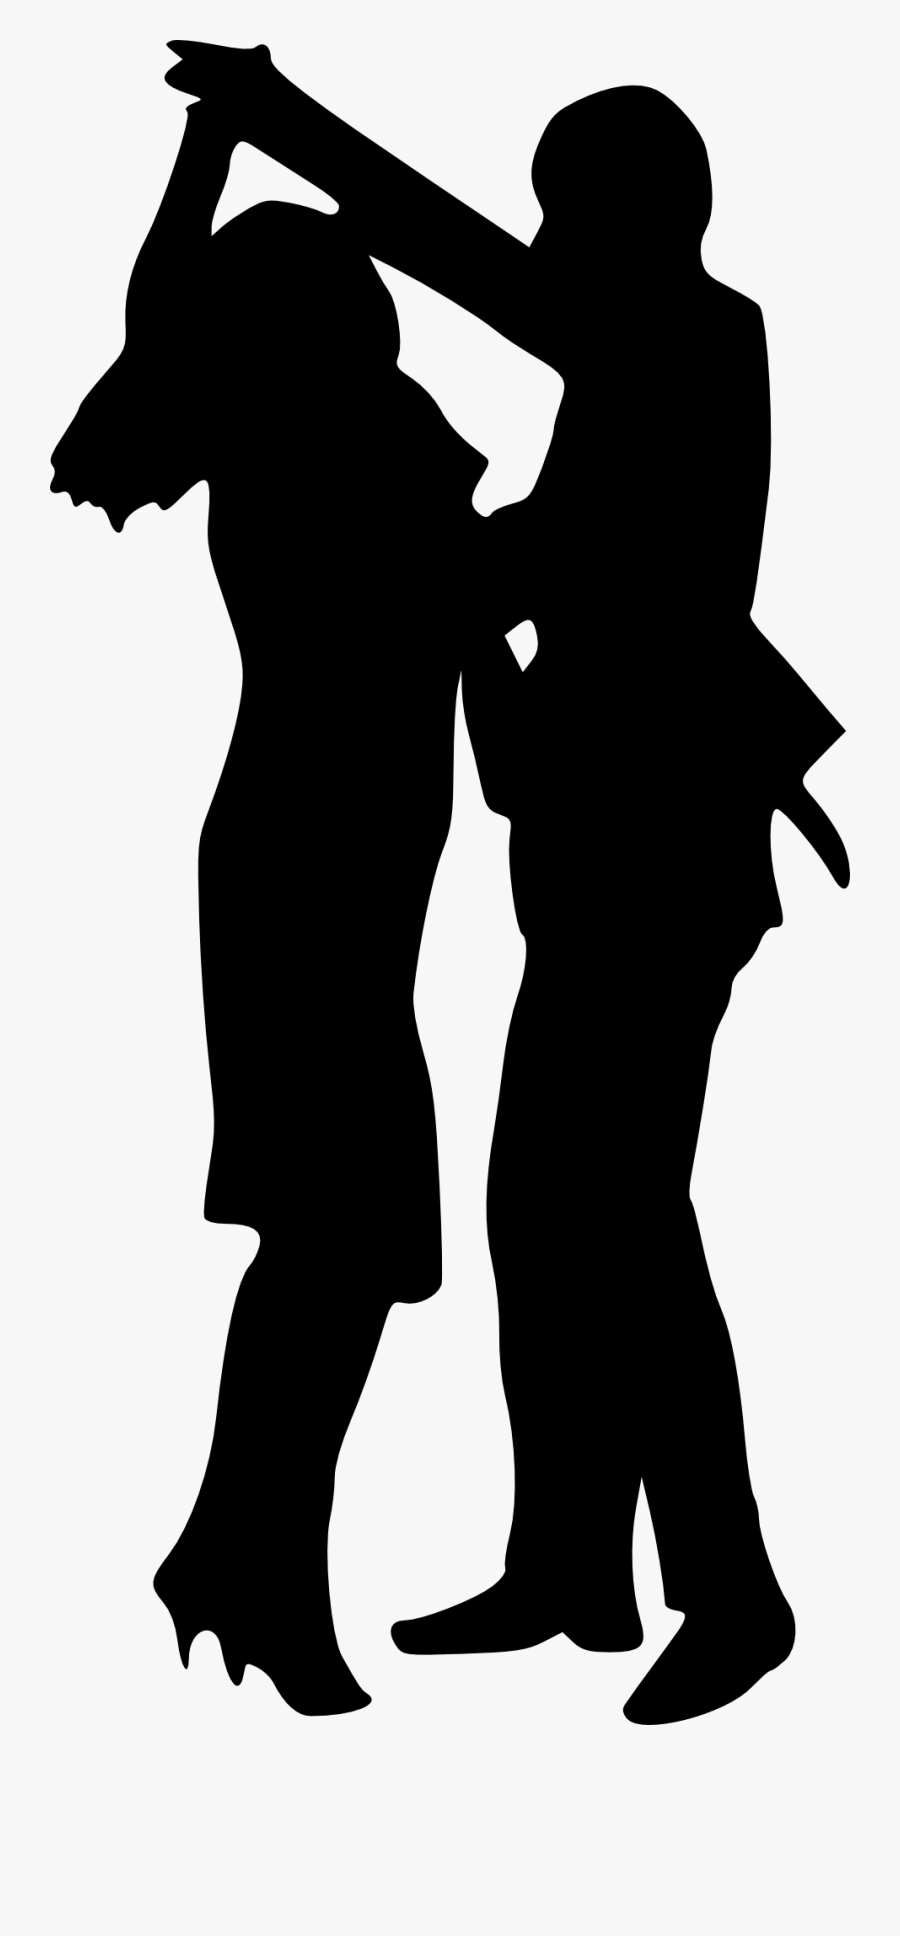 10 Couple Dancing Silhouette - Couple Dancing Silhouette Png, Transparent Clipart